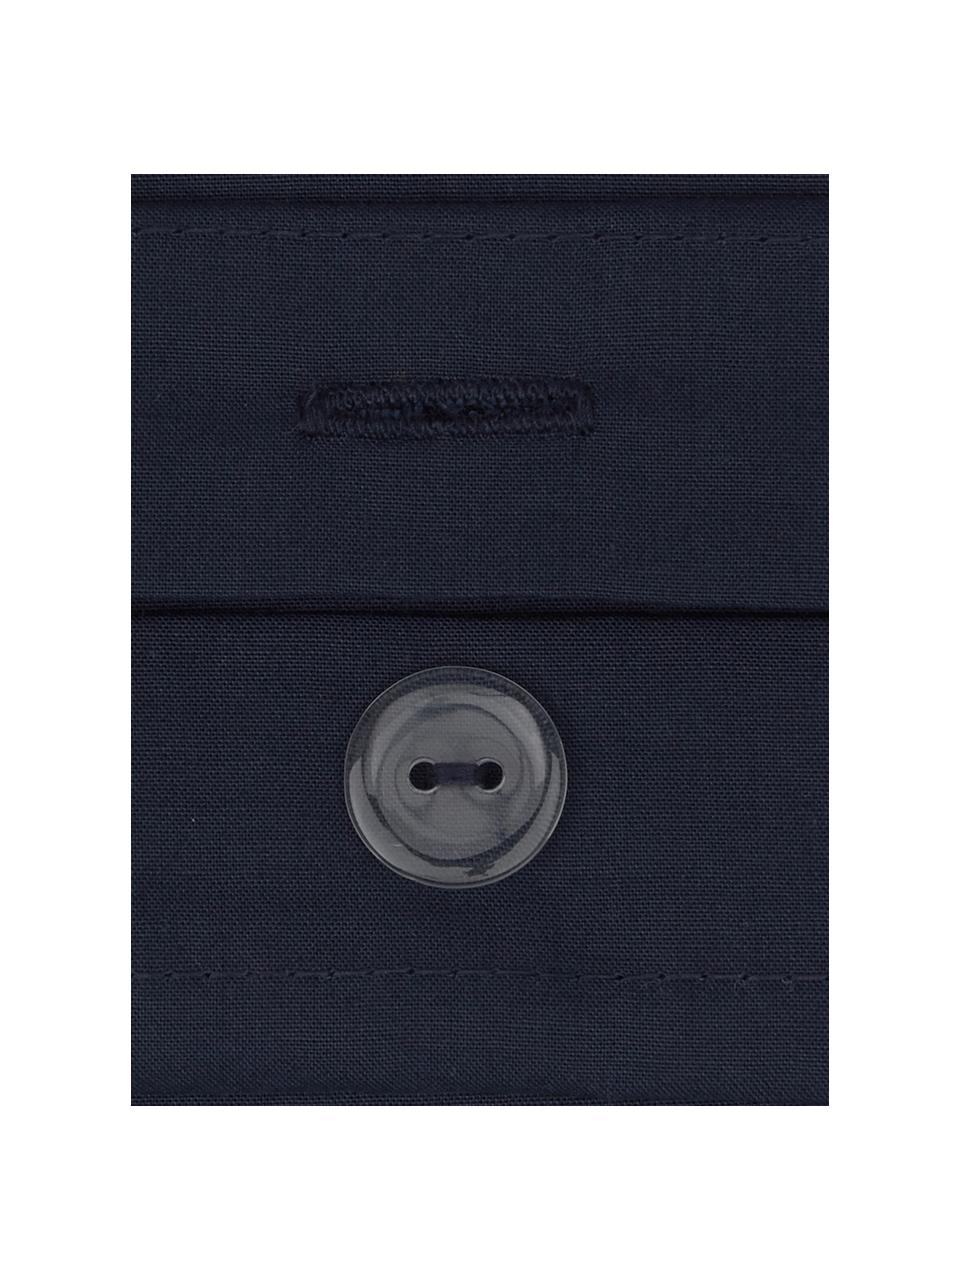 Biancheria da letto in cotone percalle blu scuro Elsie, Blu scuro, 150 x 300 cm + 1 federa 50 x 80 cm